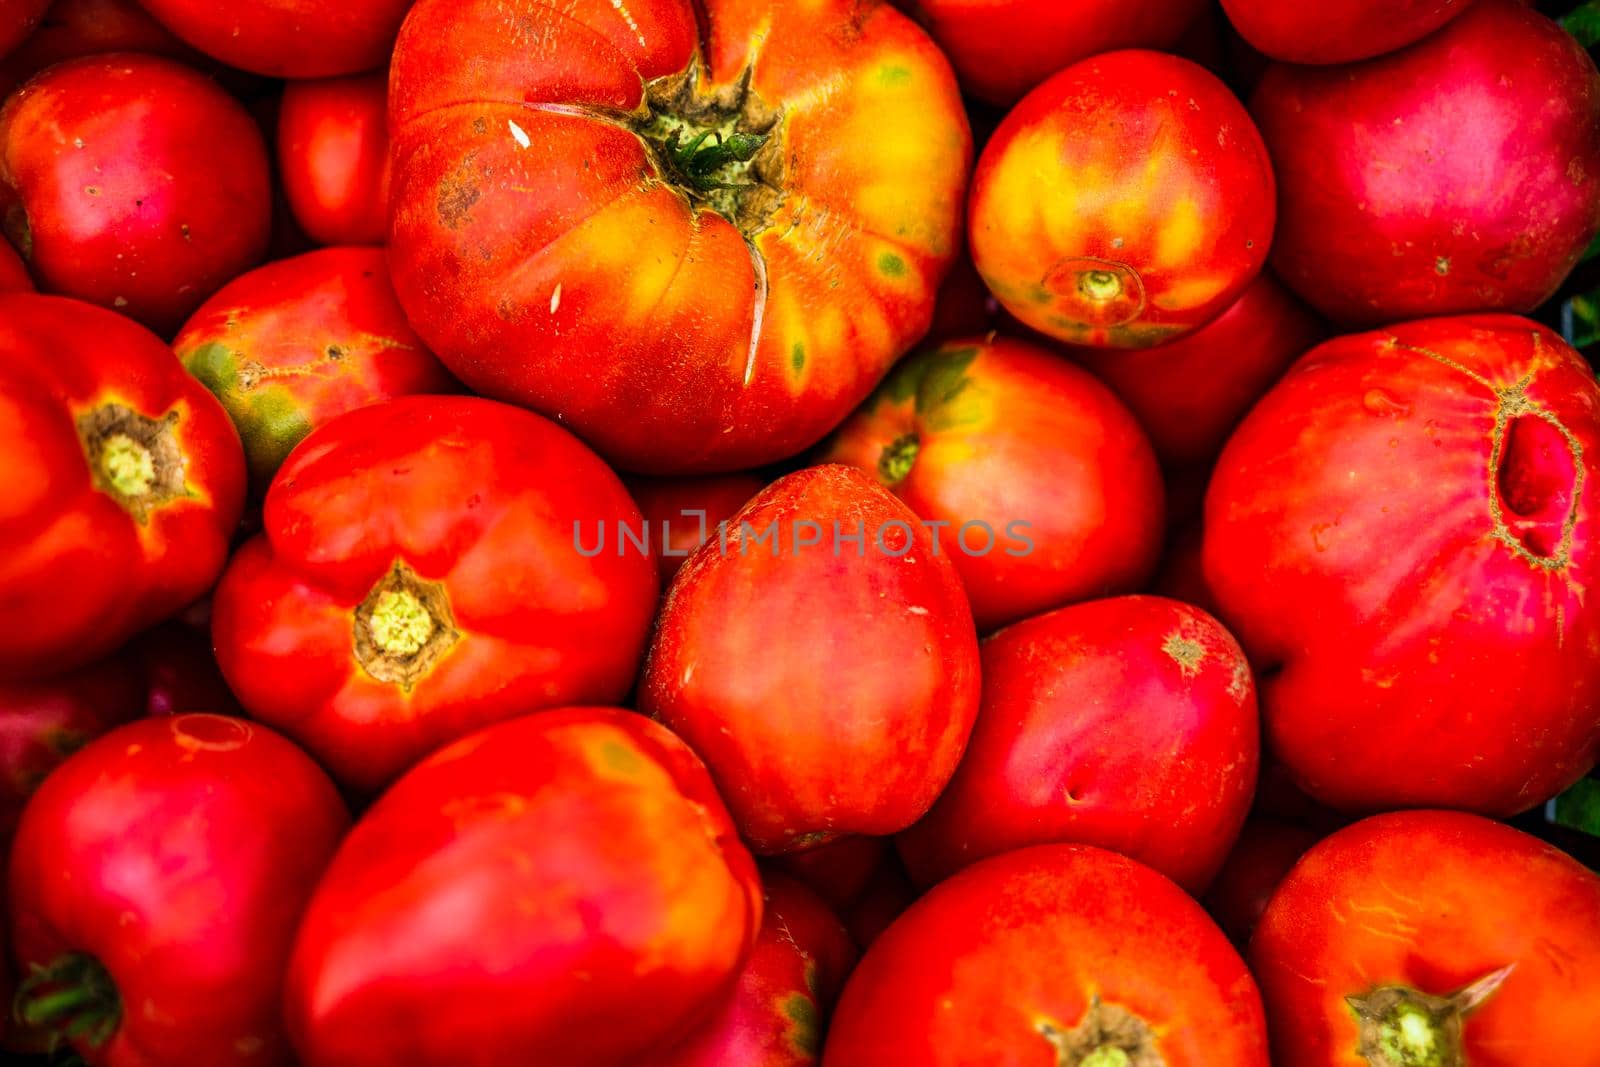 Farmers market natural ripe tomatoes. Fresh red tomato by vladispas